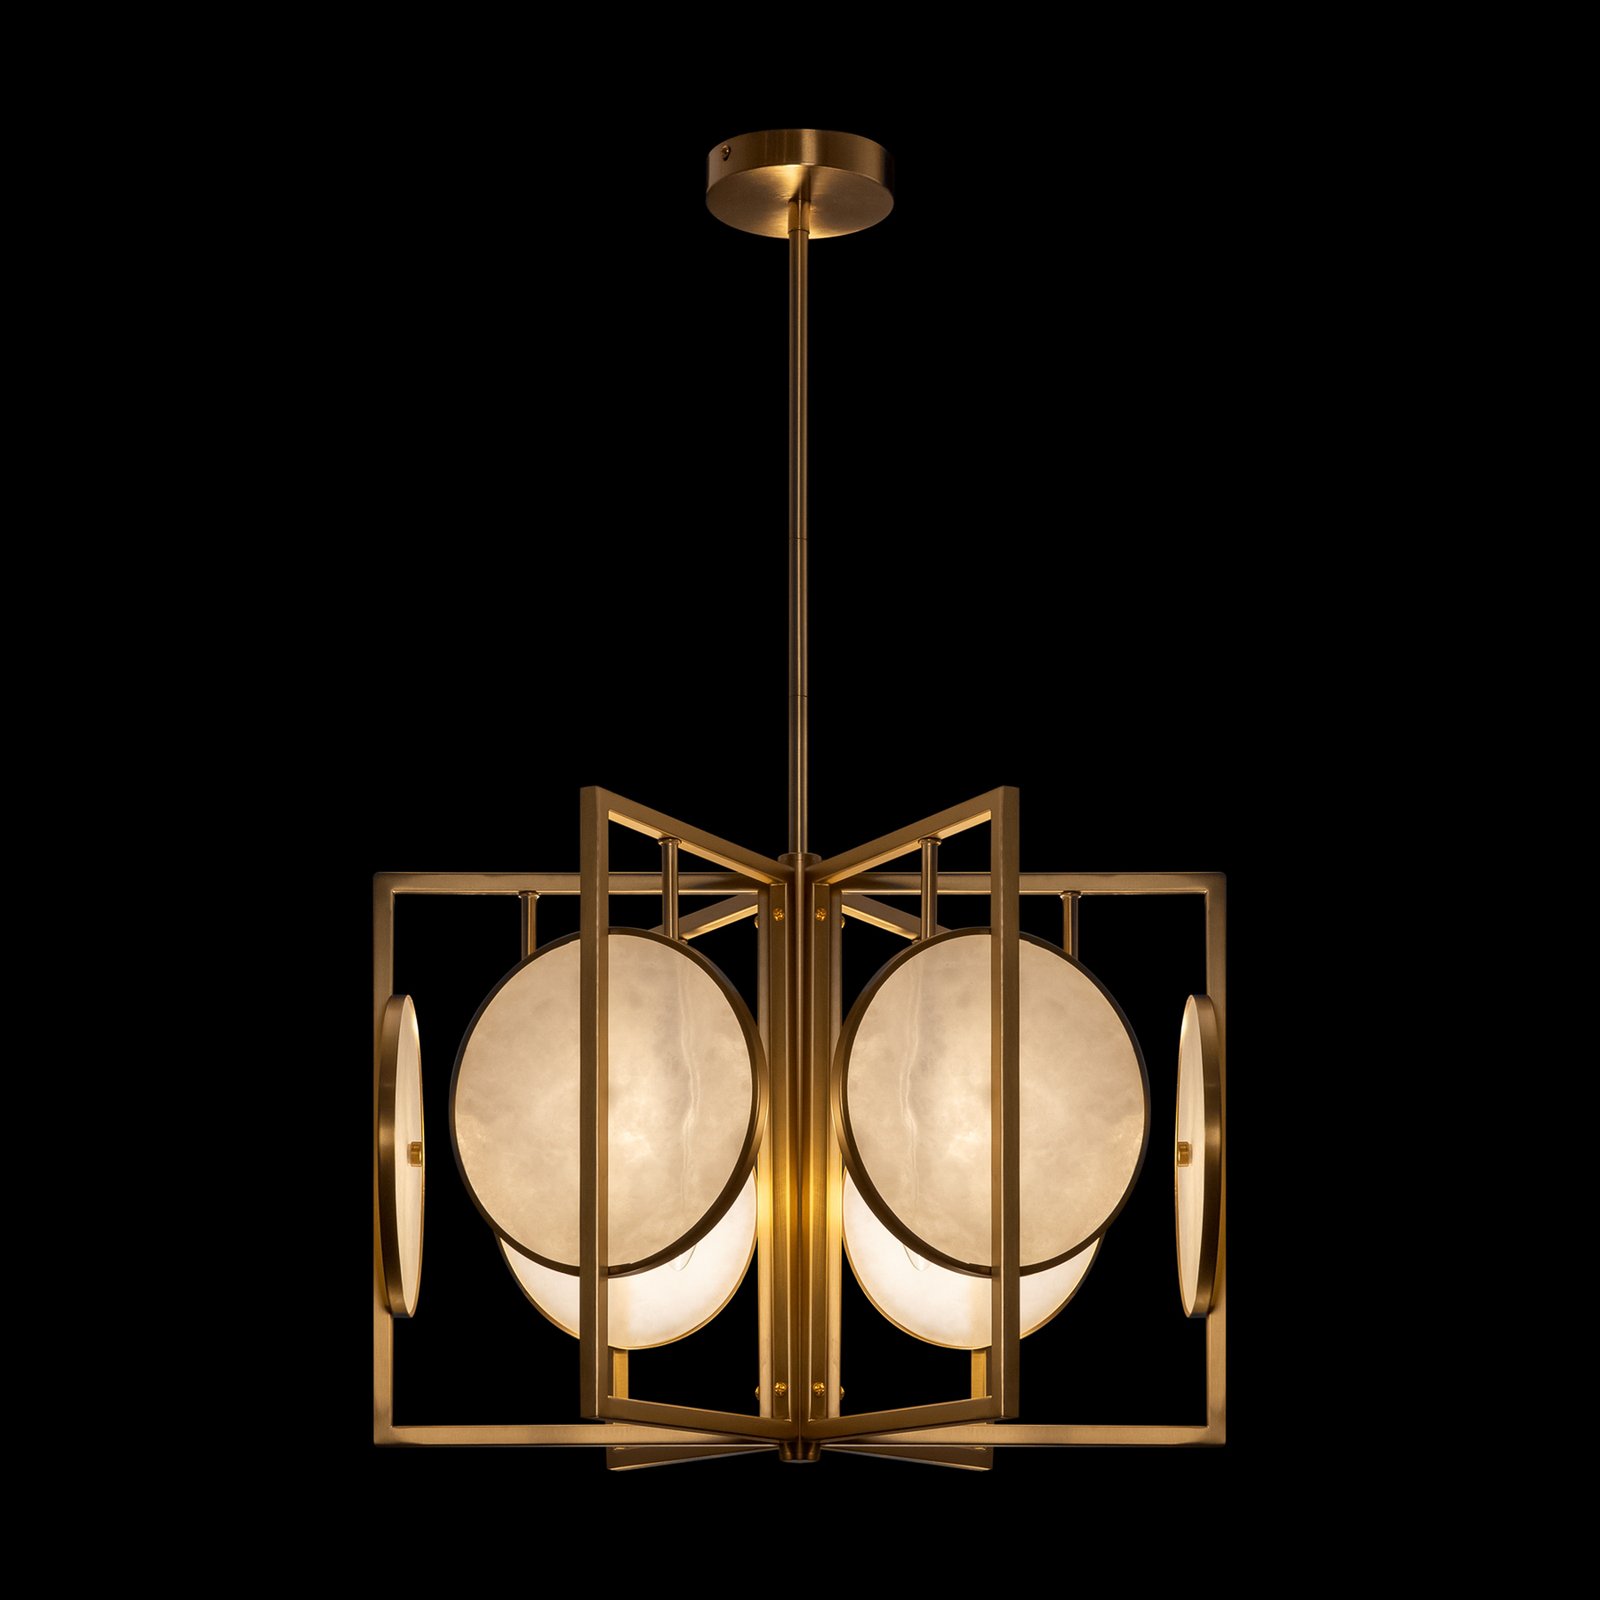 Maytoni Marmo hanglamp in goud, 6-lamps